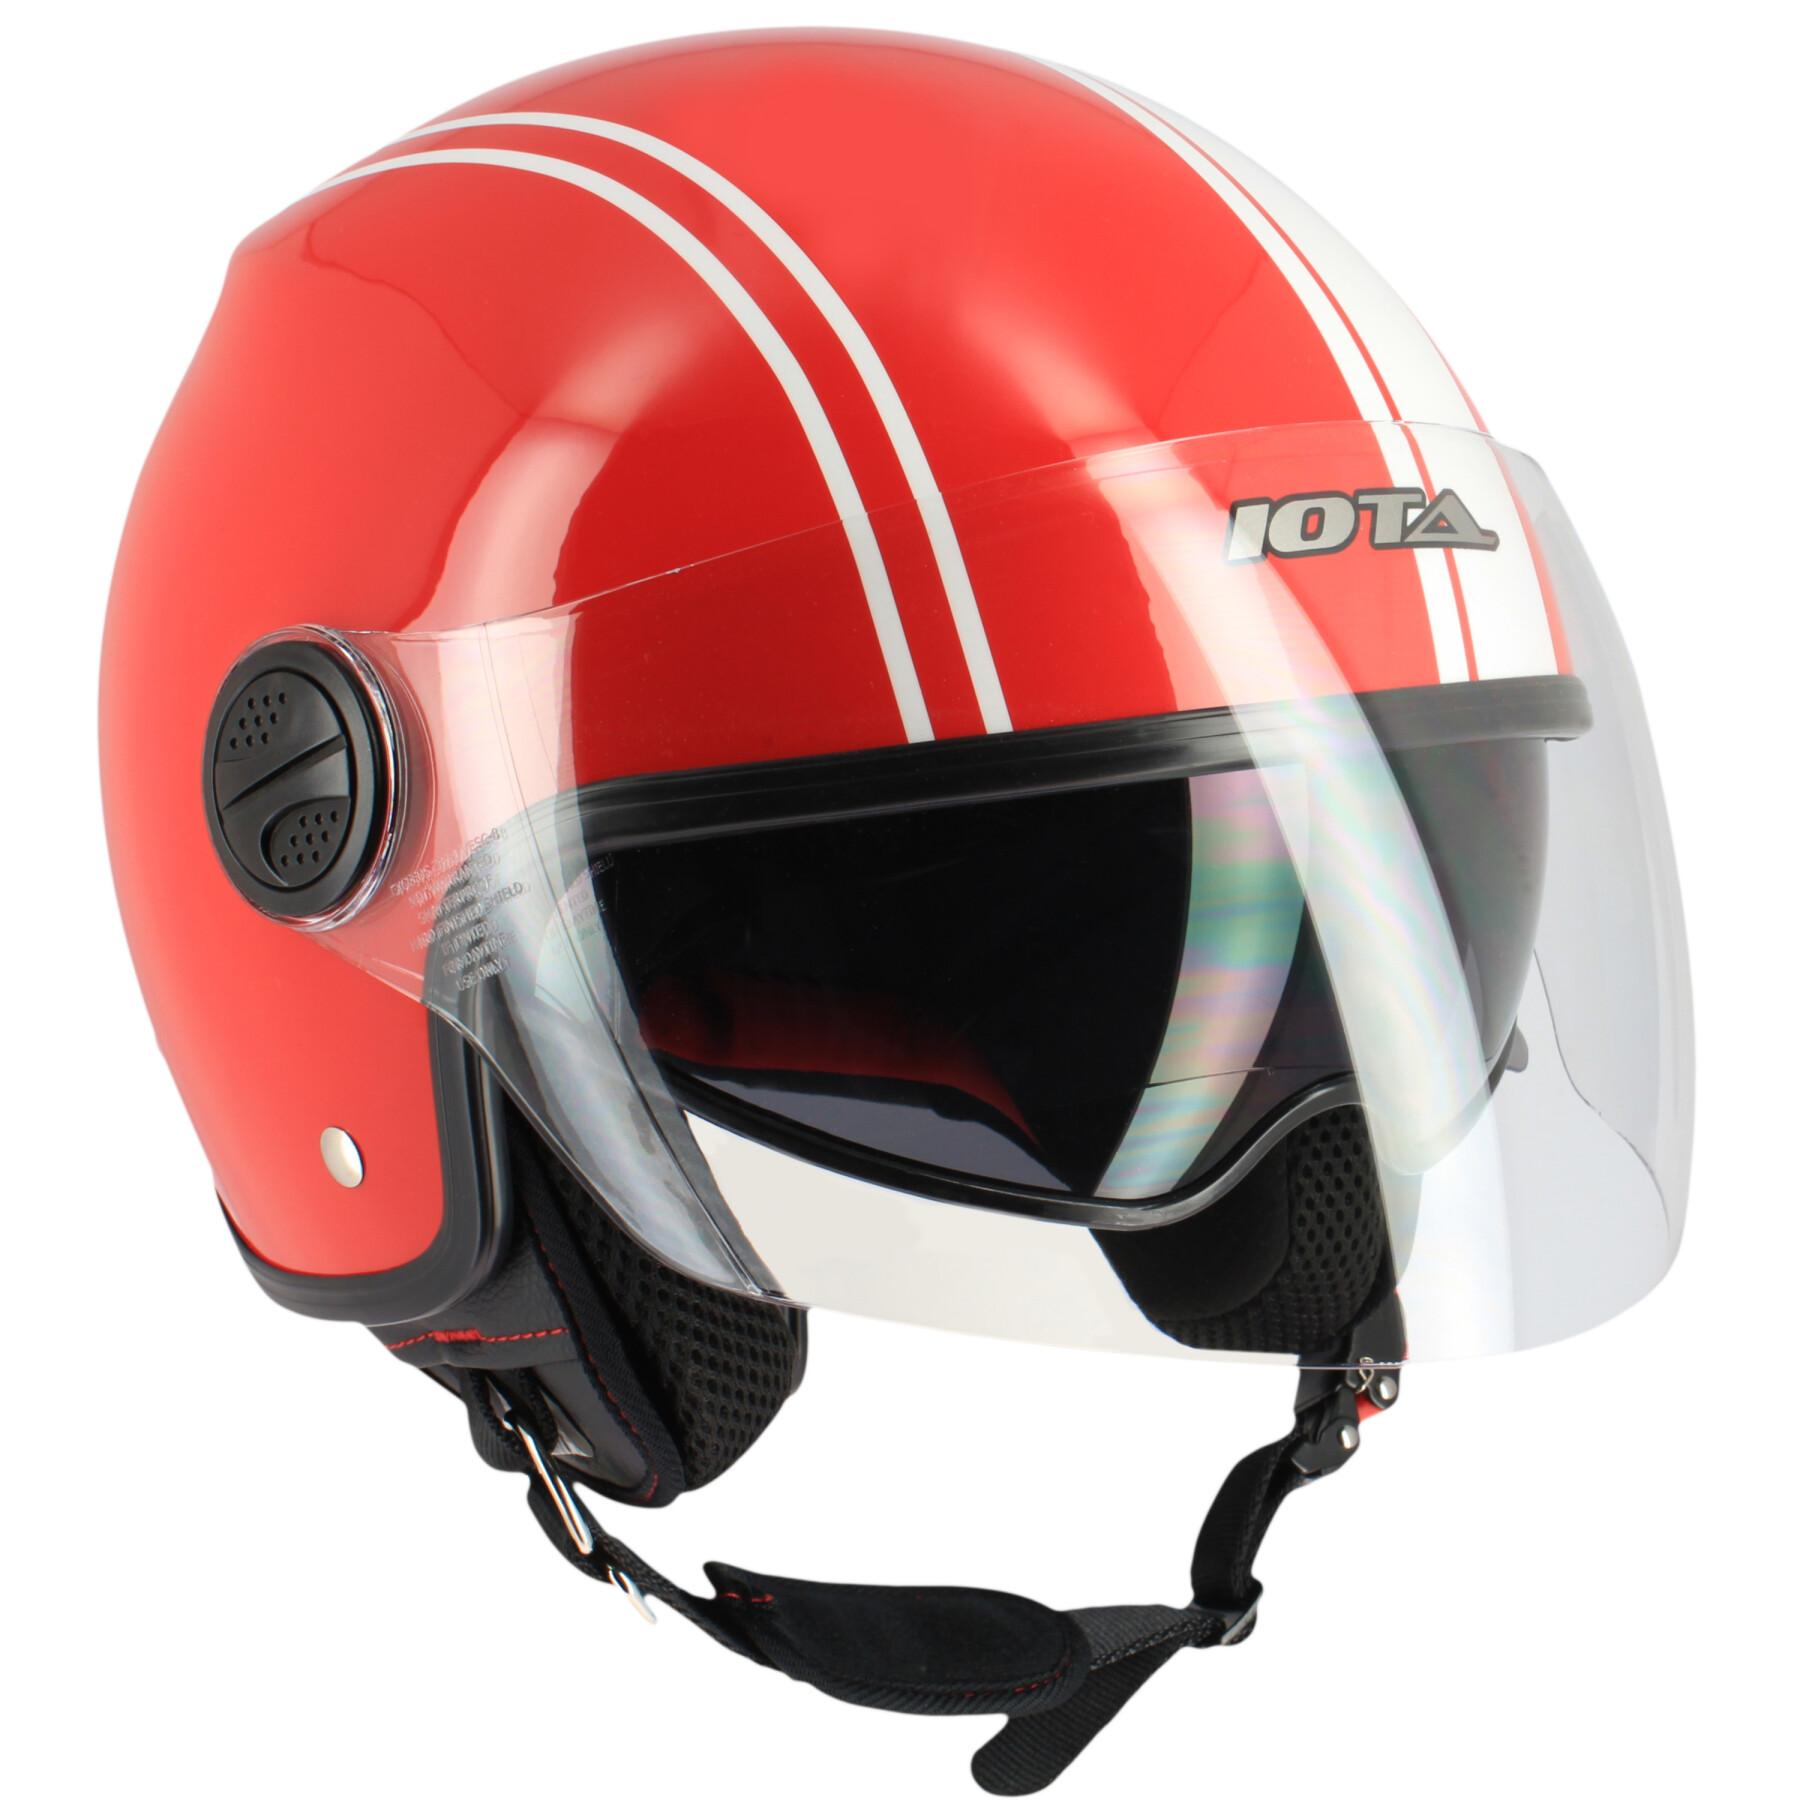 Jet helmet Iota dp10 deco